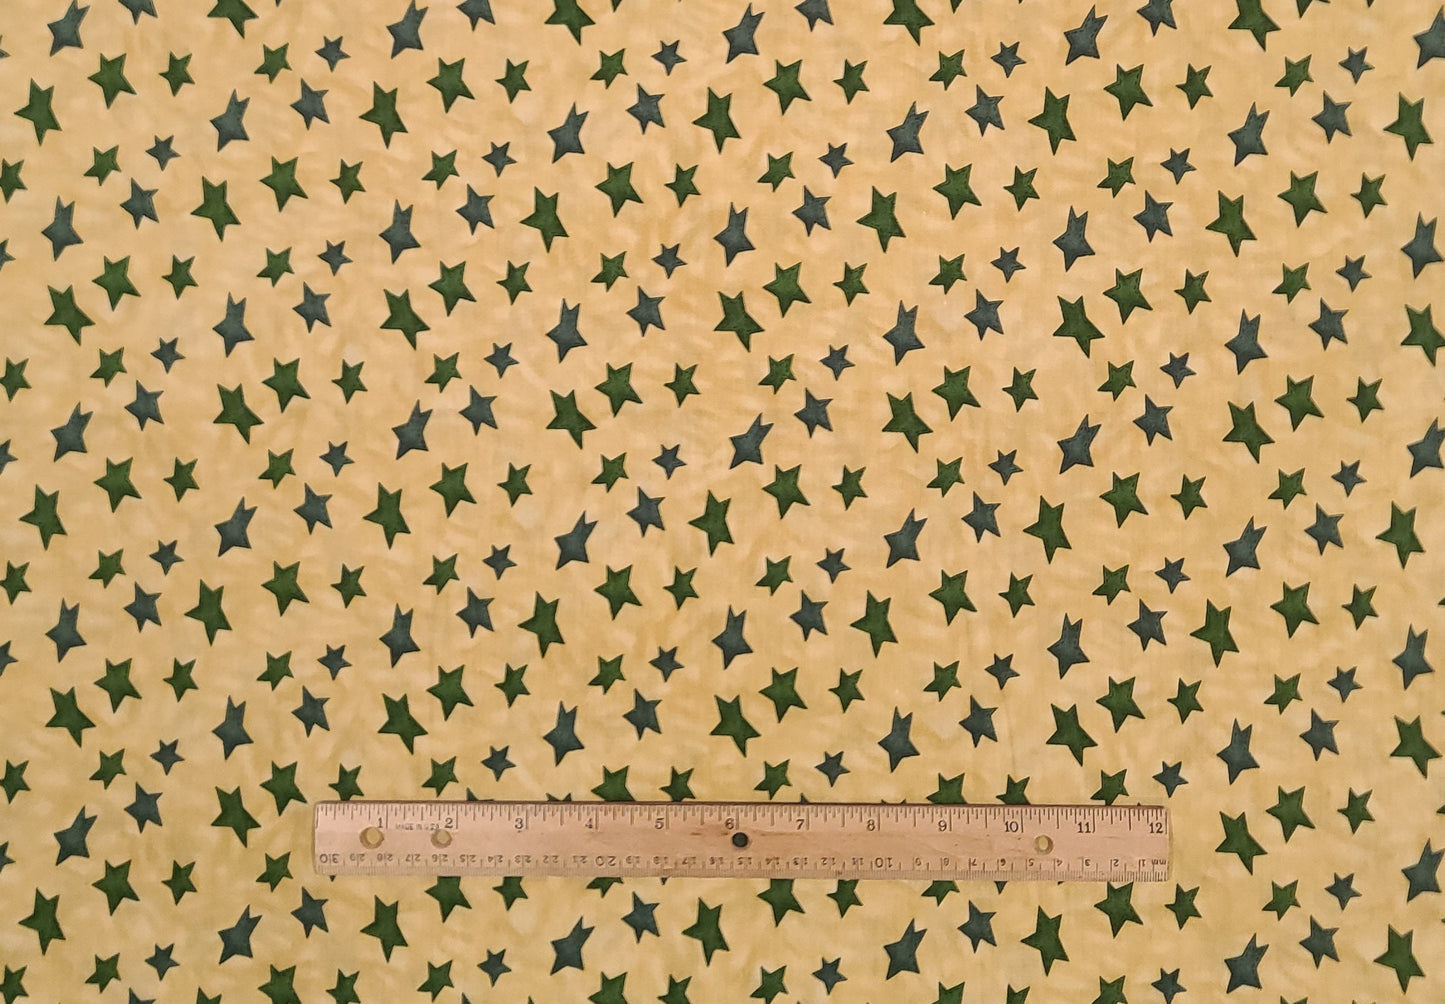 Moda Santa Clothes by Cynthia Young Hedgehog Productions - Gold Tonal Fabric / Dark Green Star Print